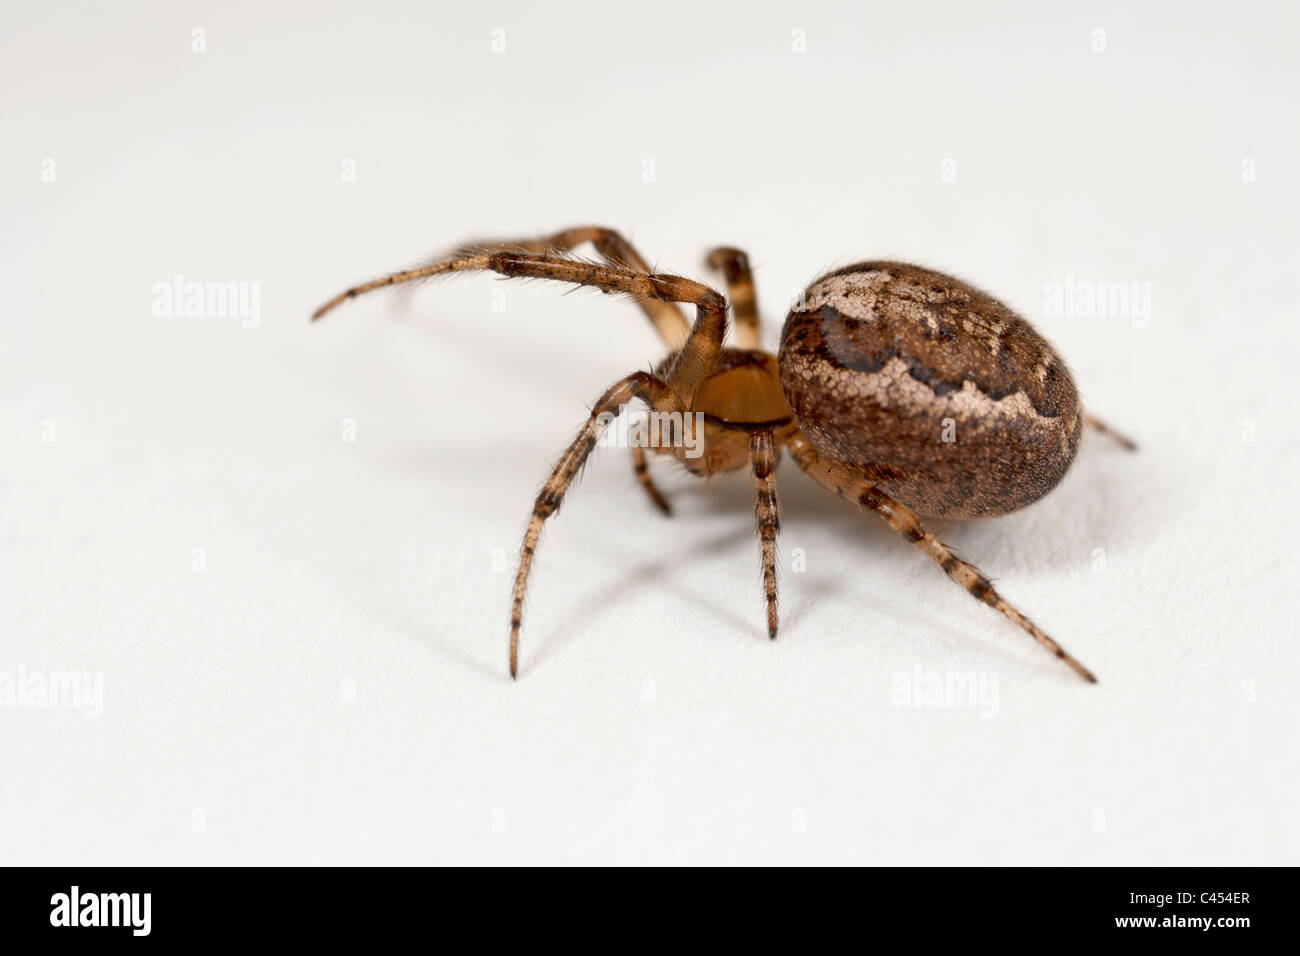 Spider, close-up Stock Photo